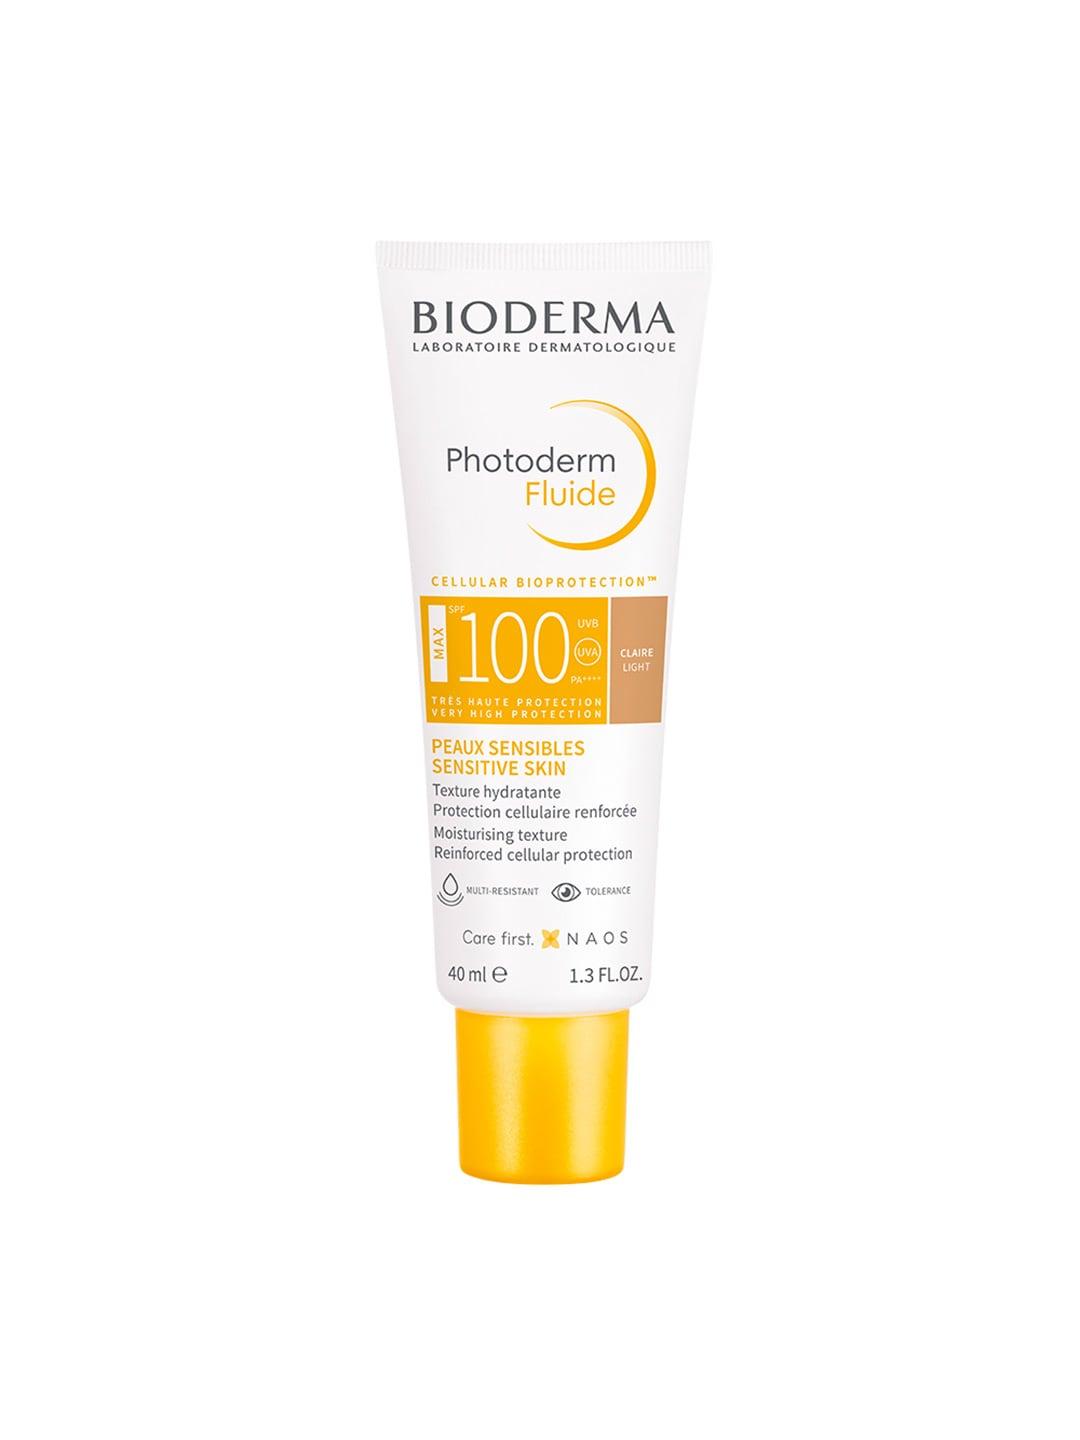 BIODERMA Photoderm Aquafluide Sunscreen SPF 100+ Claire - UVA Protection 40 ml